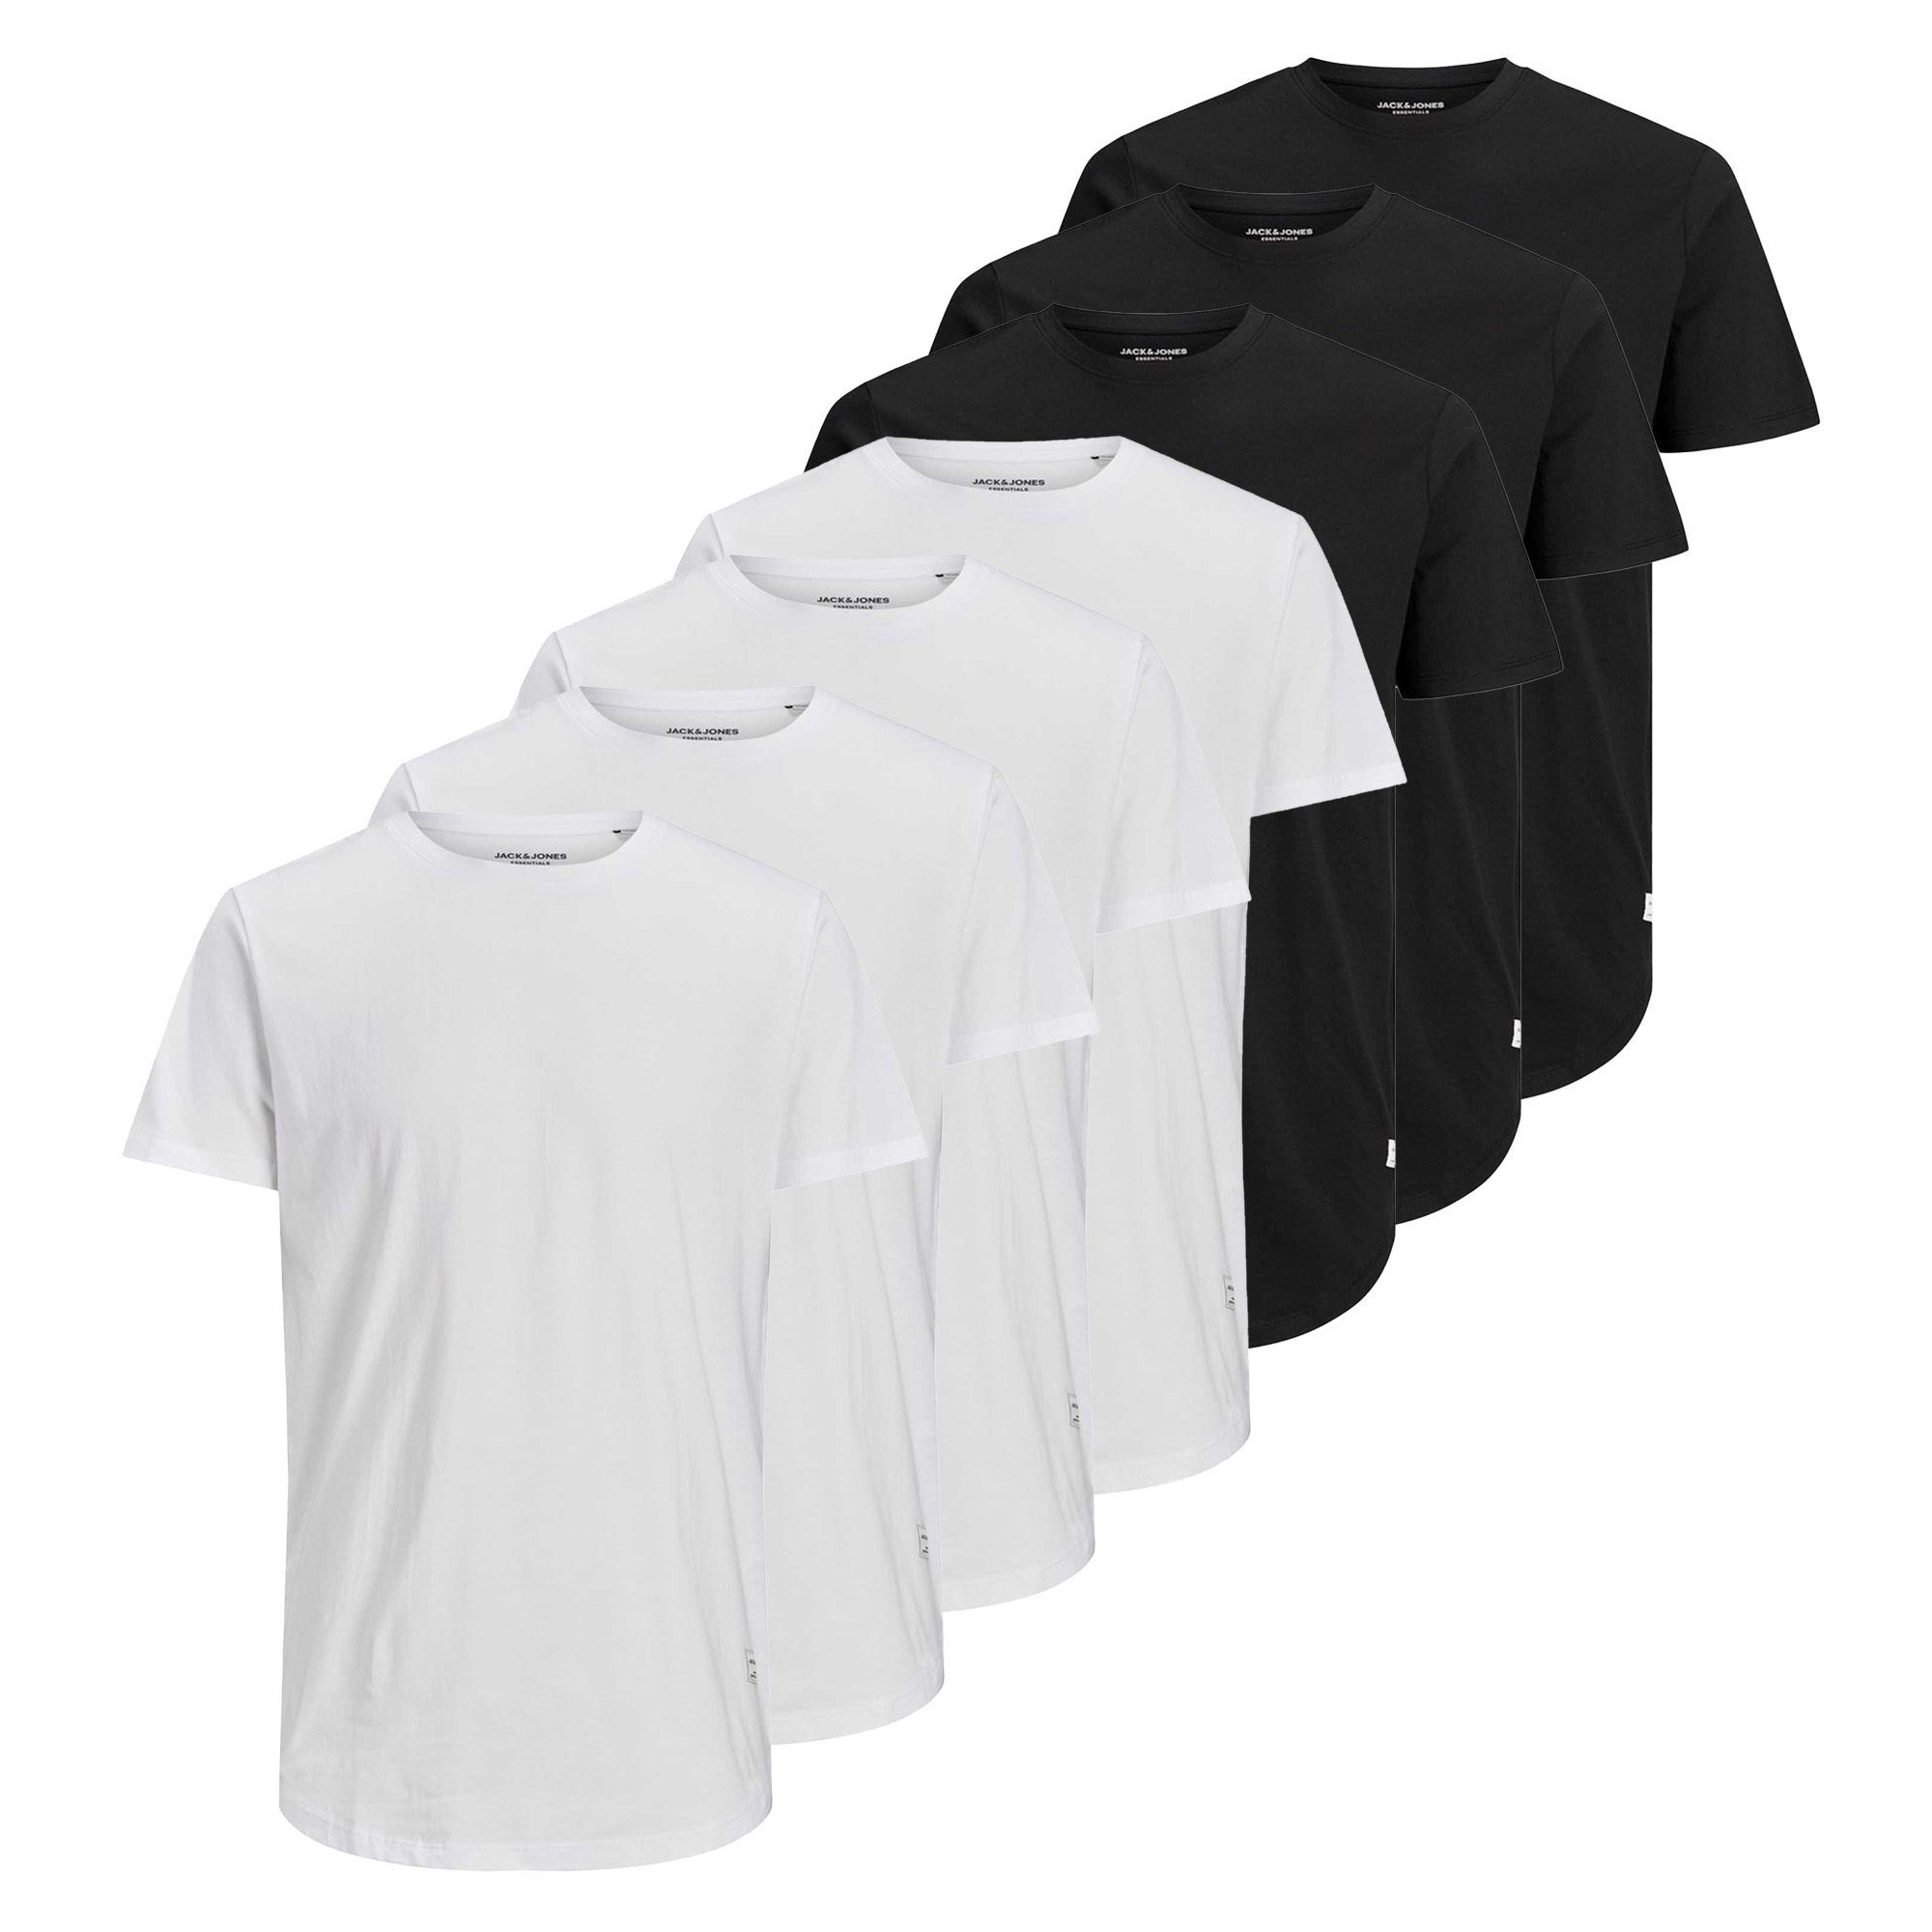 7er T-Shirt NECK T-Shirt, & Jones Jack Pack TEE Herren Weiß/Schwarz - JJENOA CREW